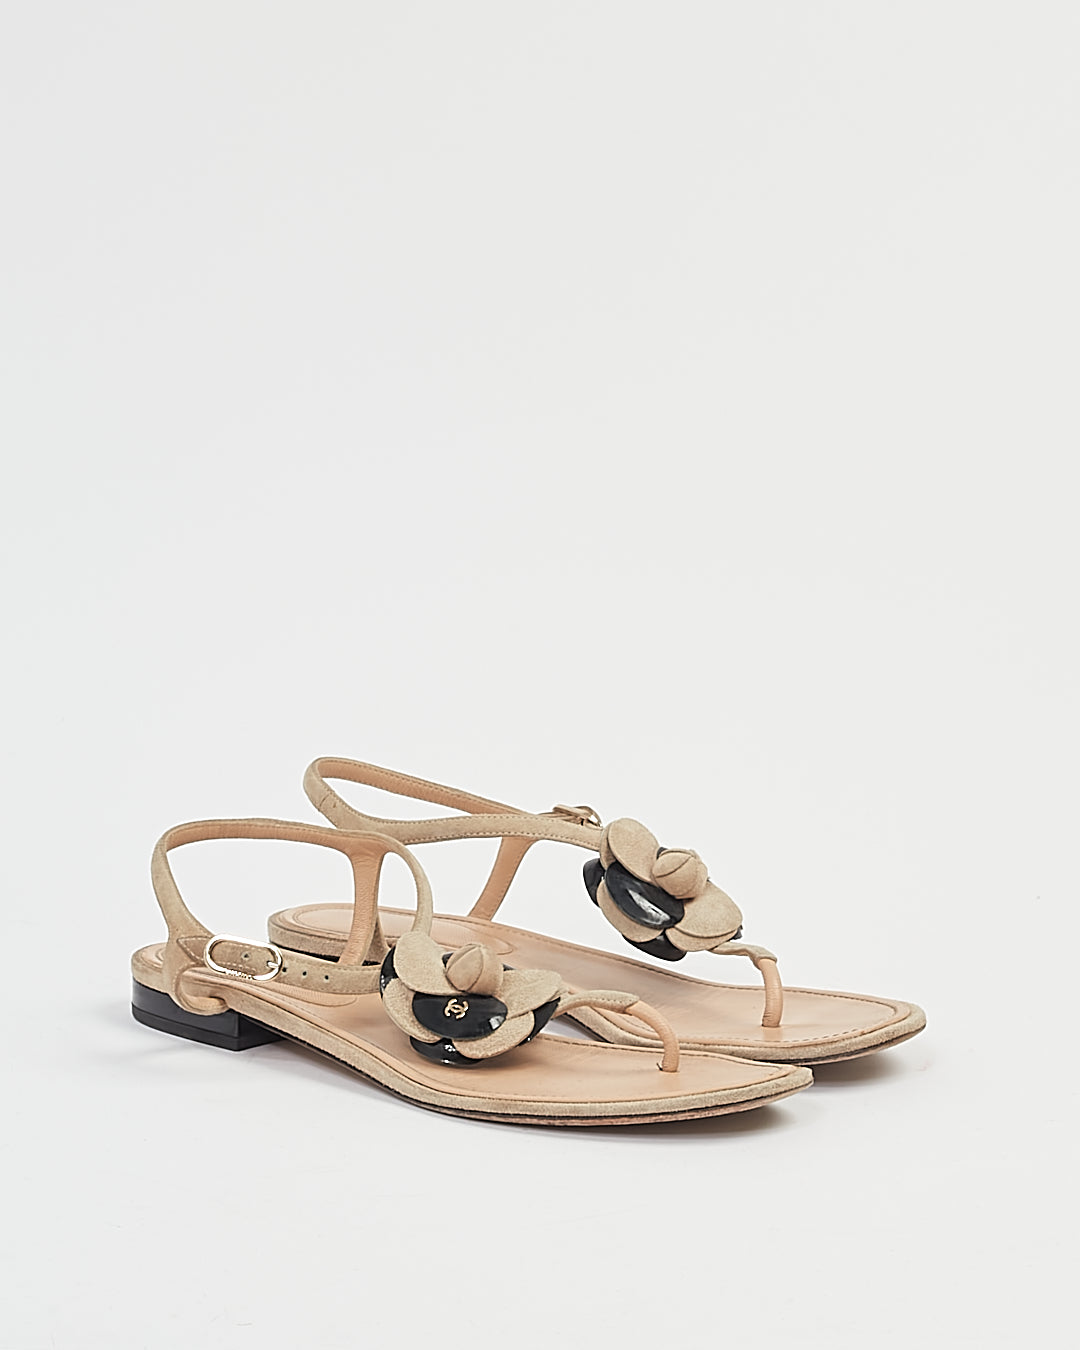 Chanel Beige/Black Camelia Flower Sandals - 38.5